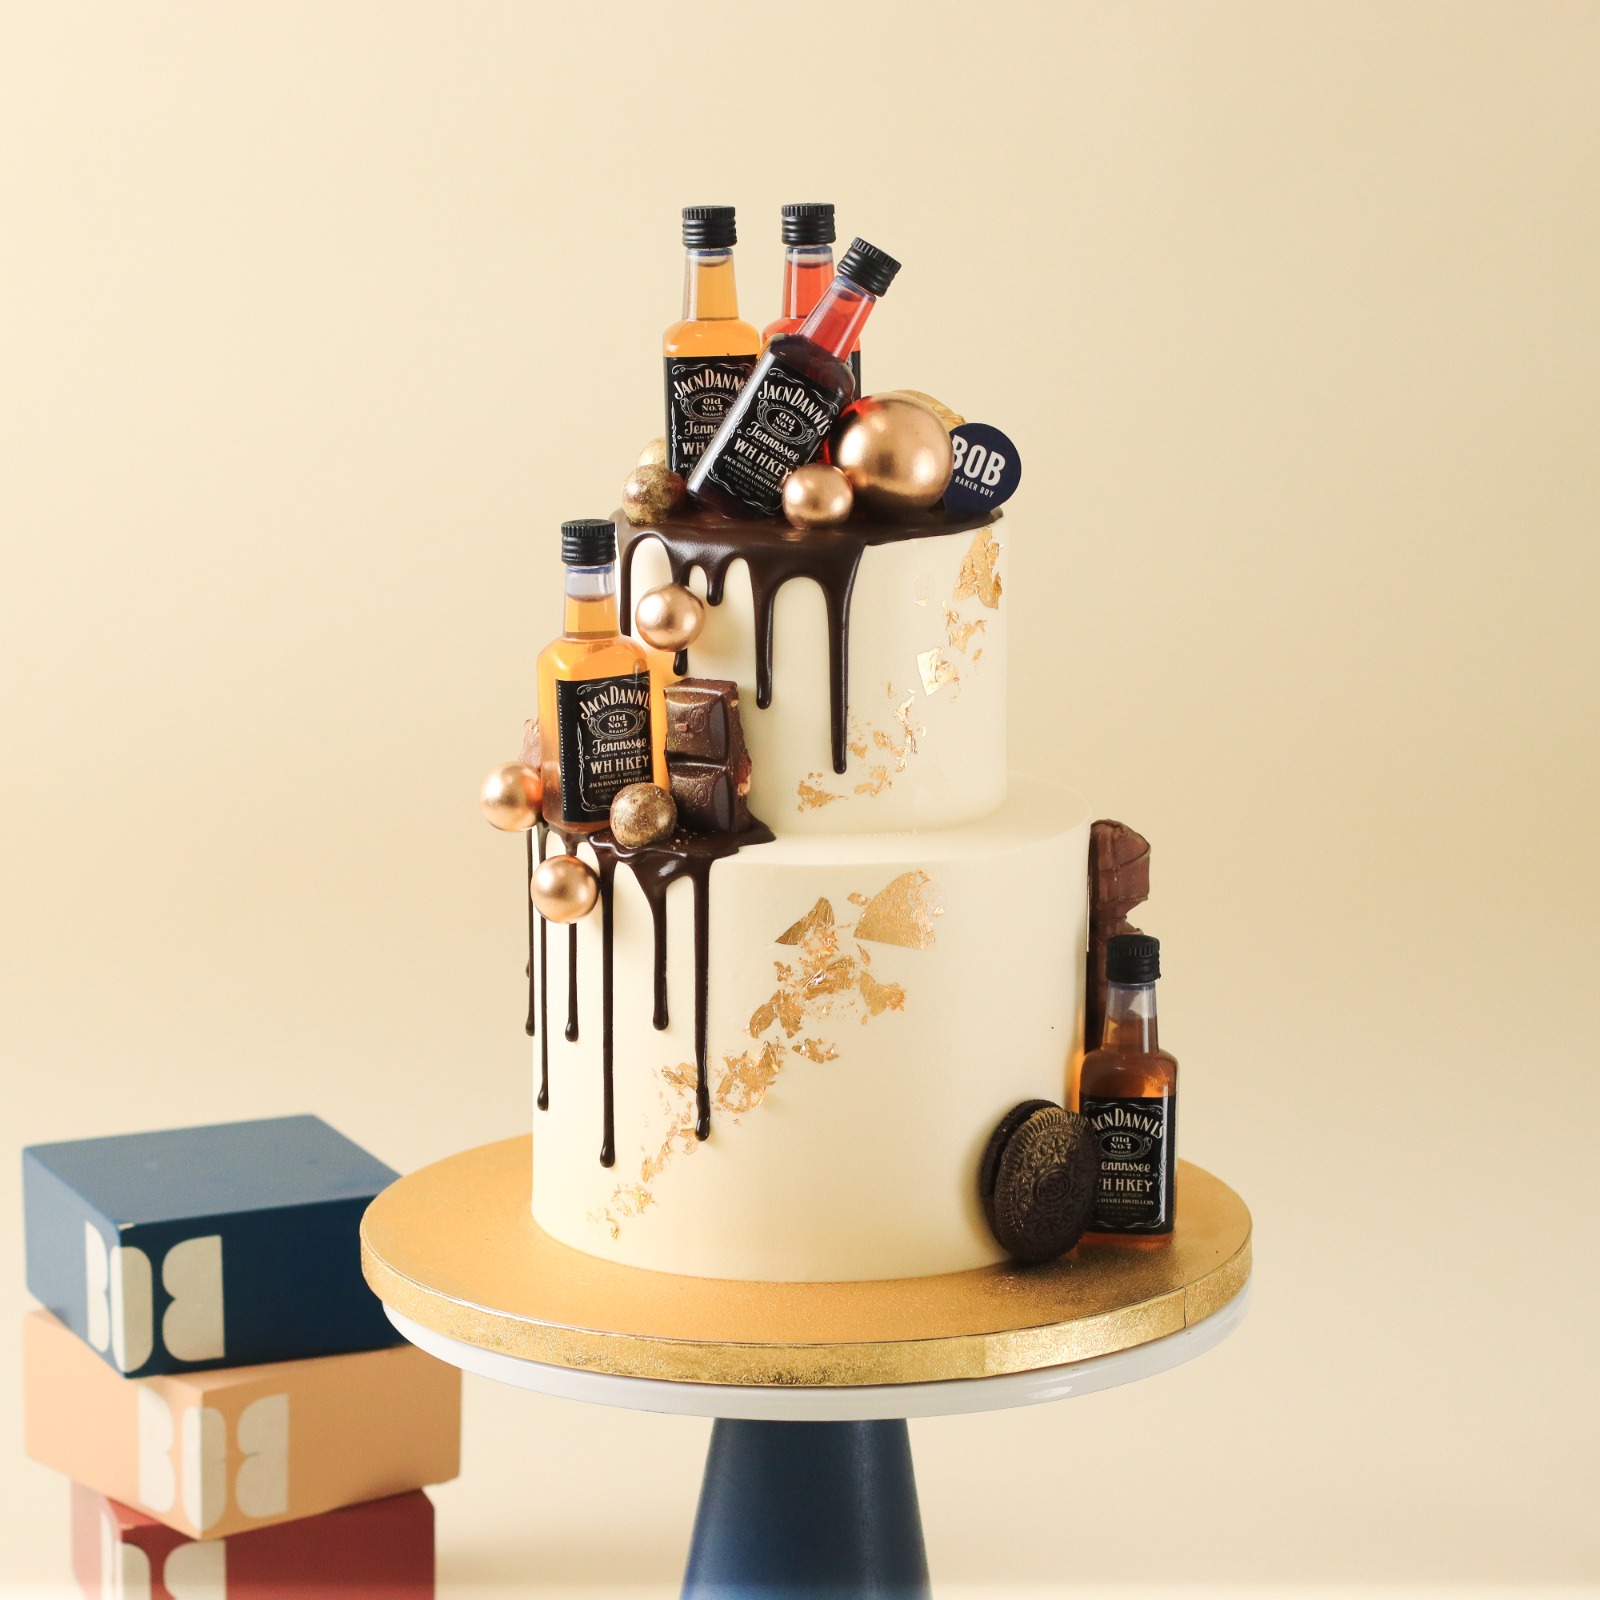 Alcohol birthday cake | 21st birthday cakes, 21st birthday gifts, 21st  birthday cake alcohol